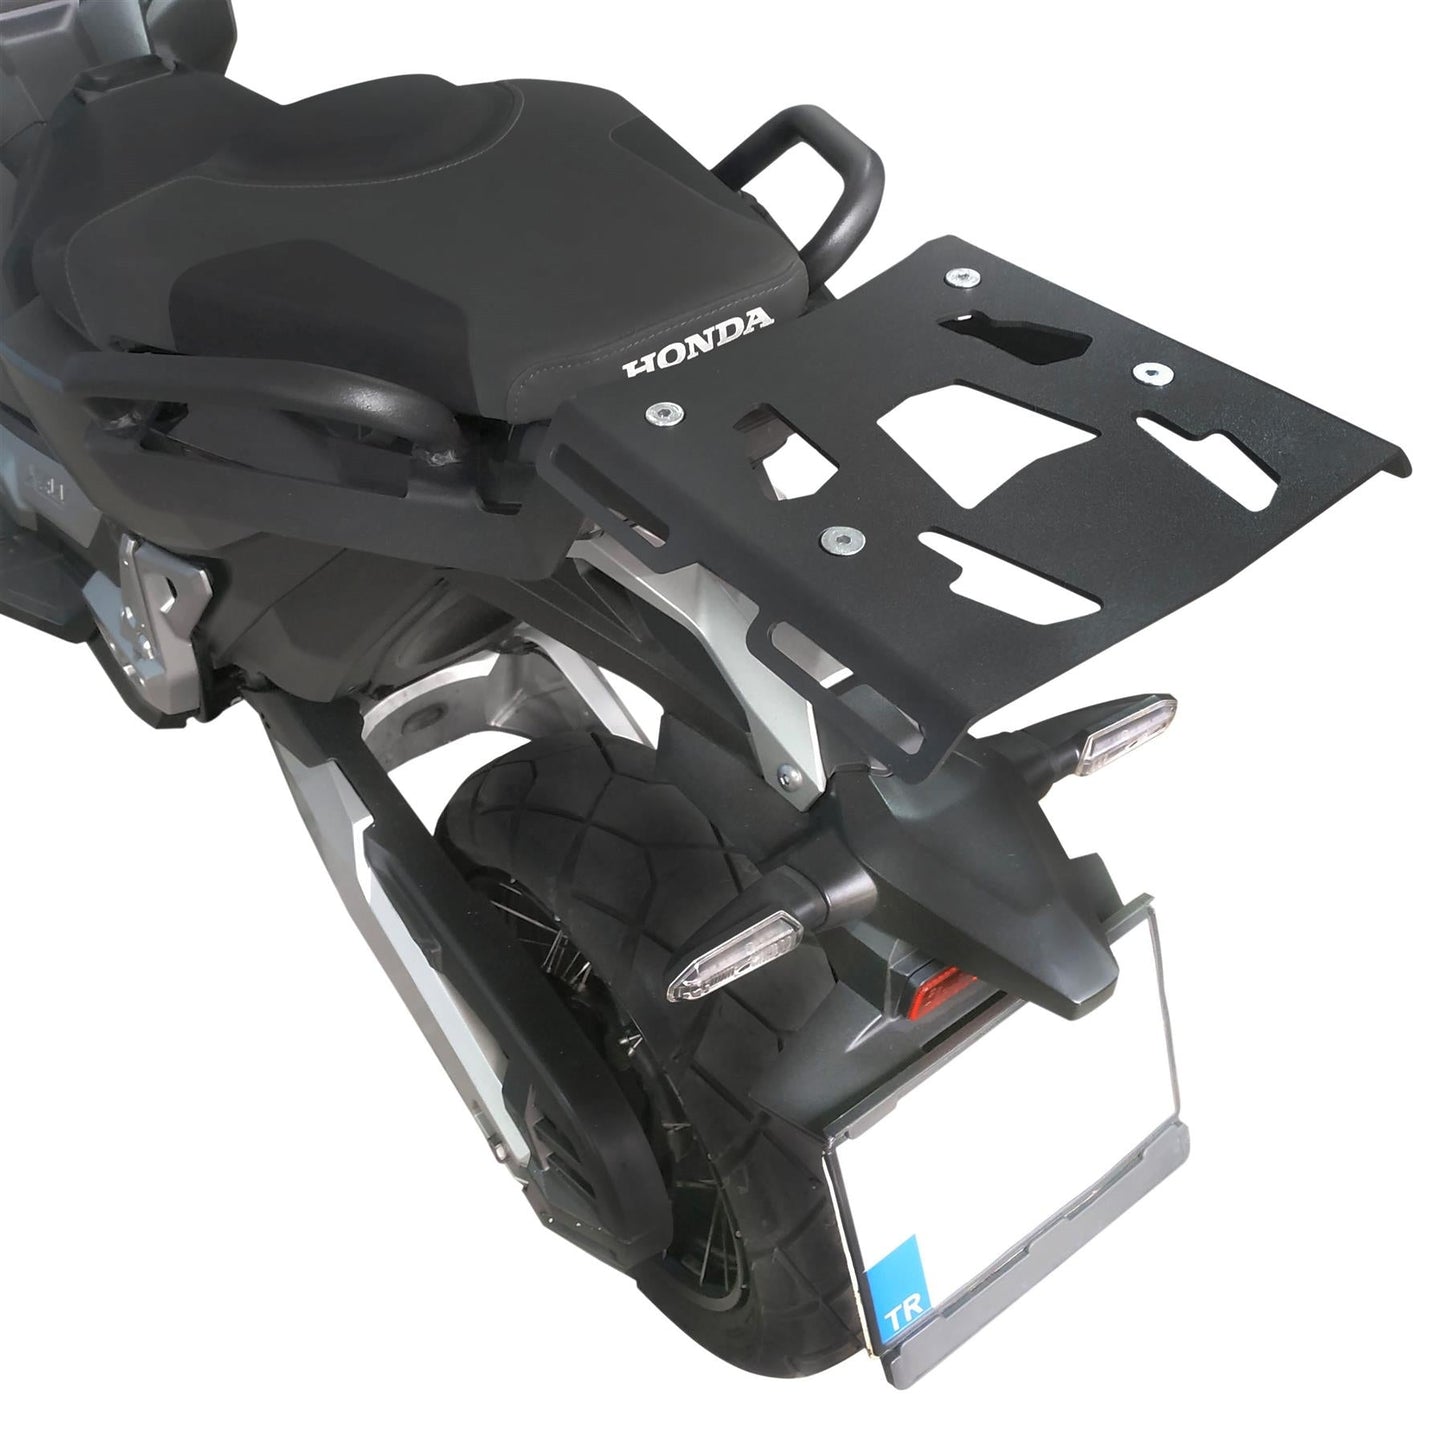 Honda X-ADV rear rack top box carrier 17-20 - Equipment4motorcycle